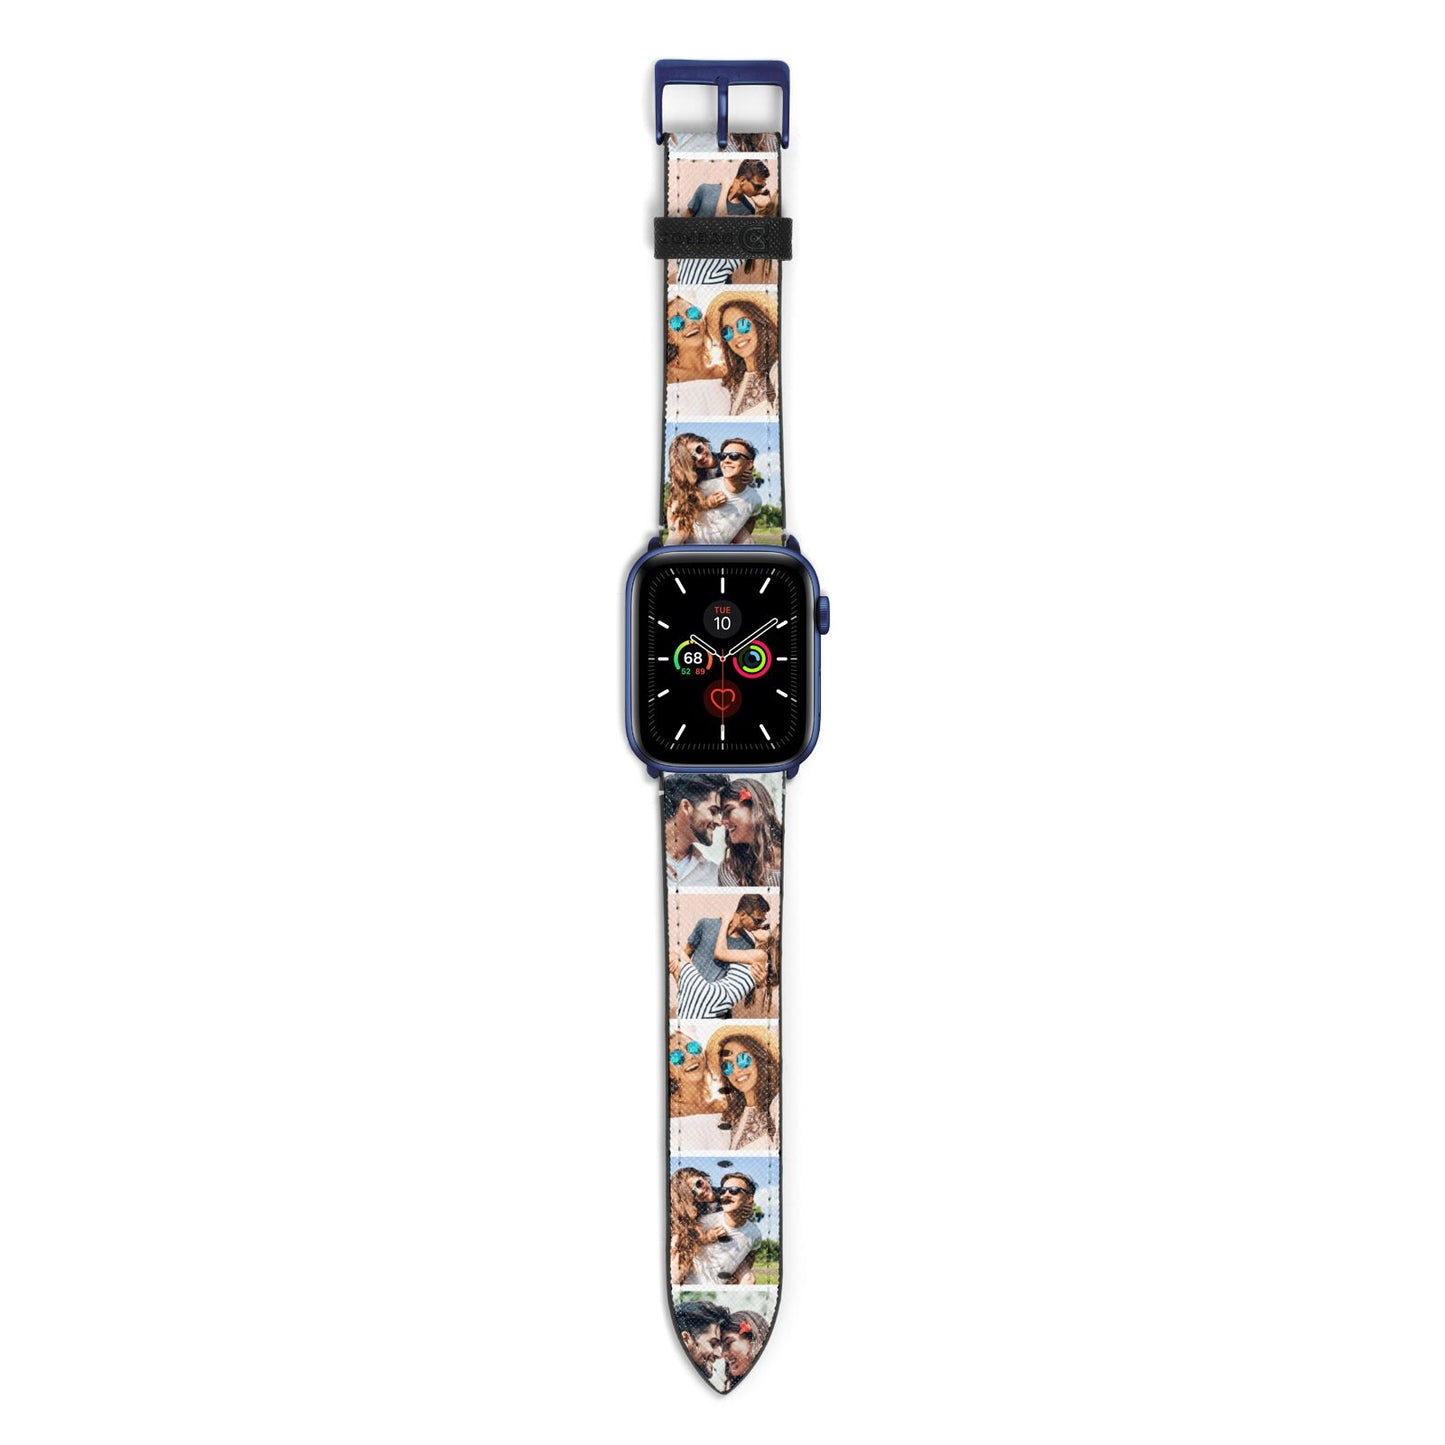 Photo Strip Montage Upload Apple Watch Strap with Blue Hardware